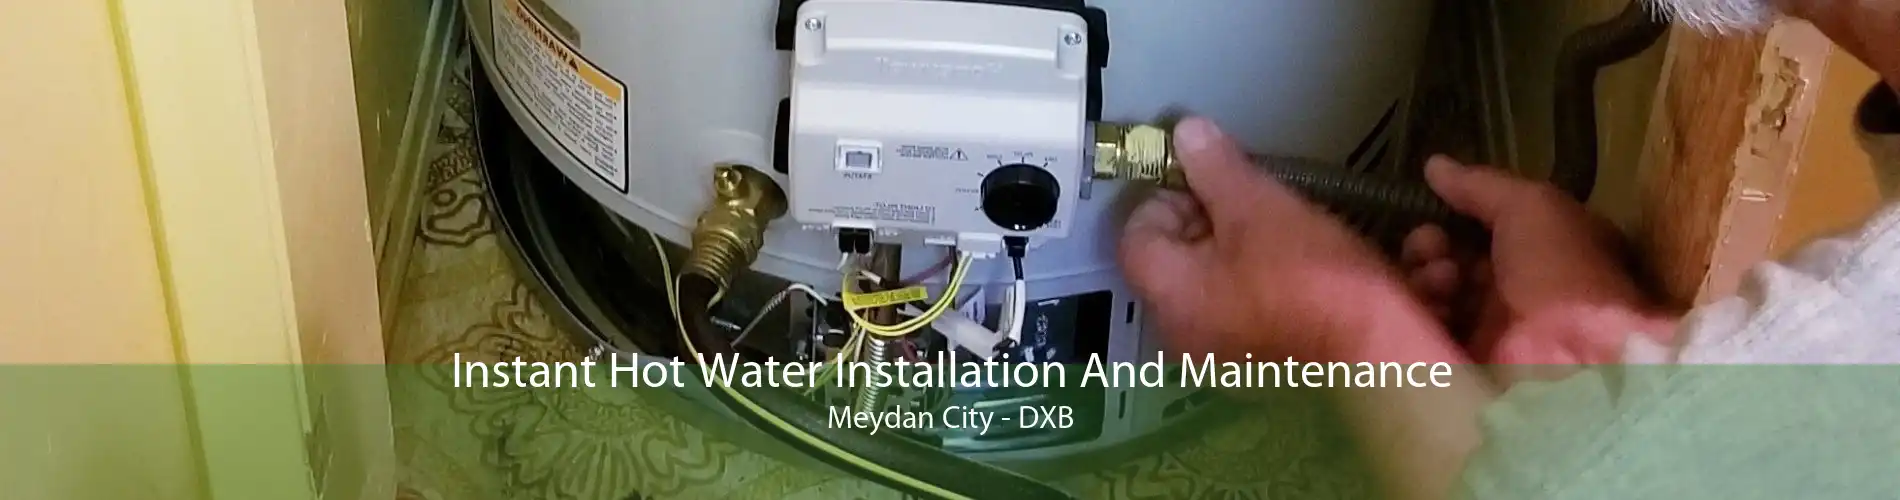 Instant Hot Water Installation And Maintenance Meydan City - DXB